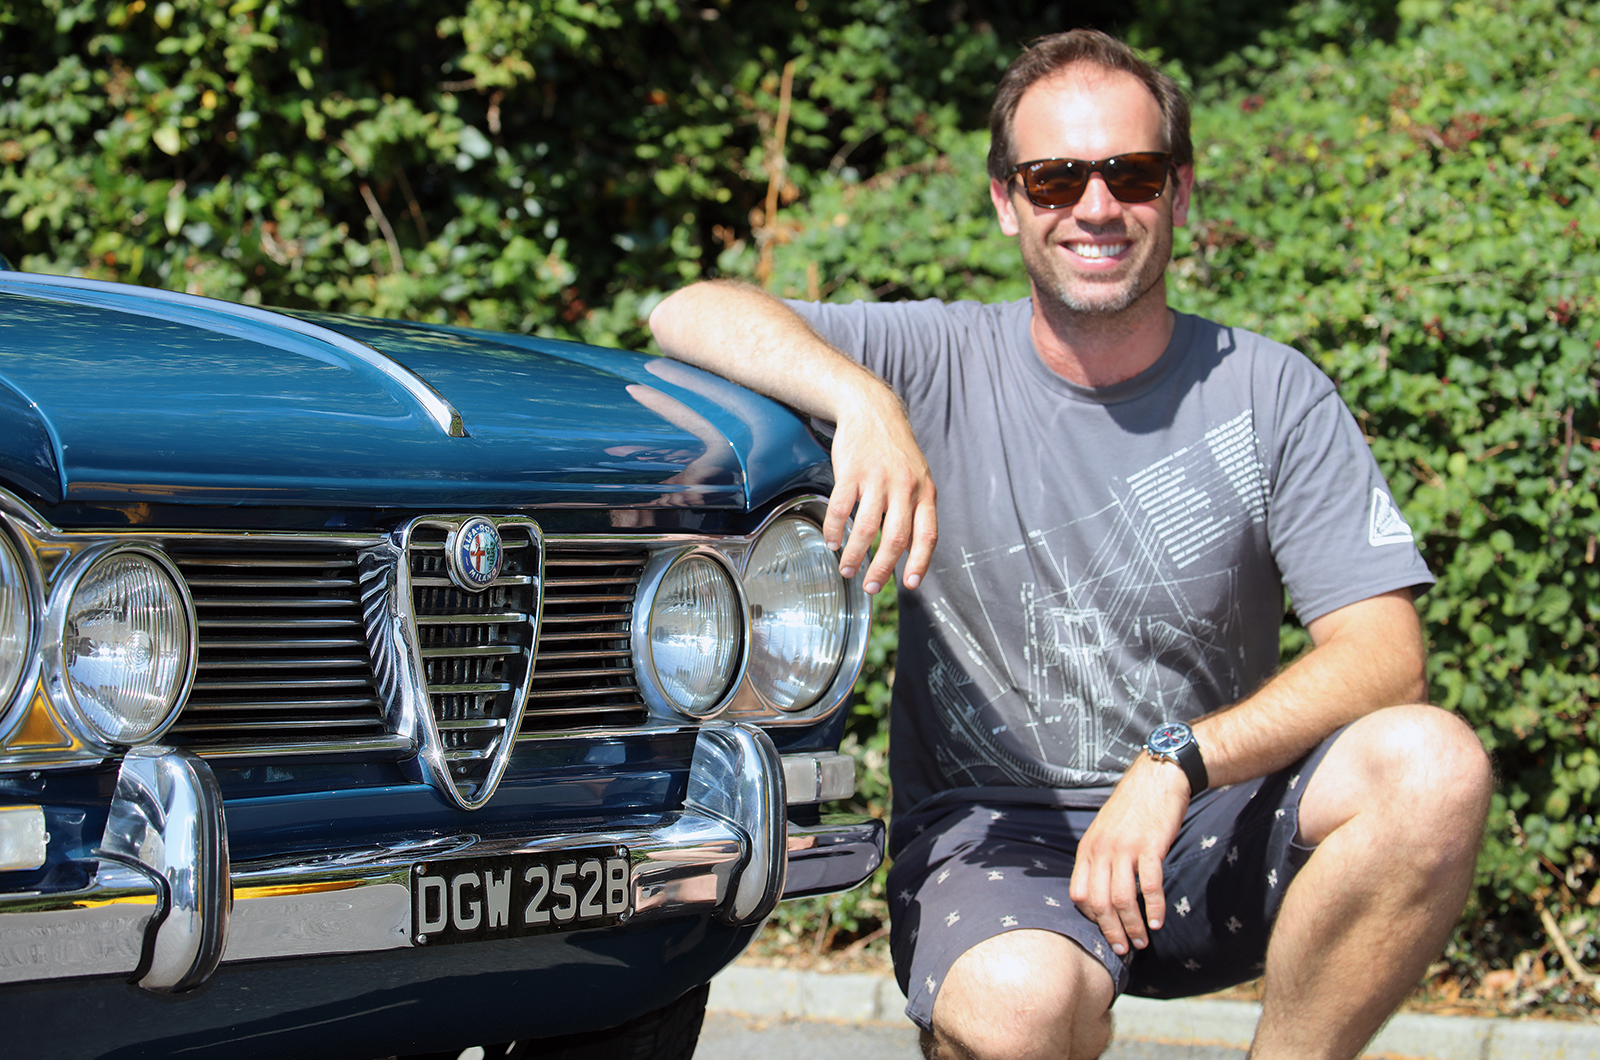 Classic & Sports Car – Buyer’s guide: Alfa Romeo Giulia